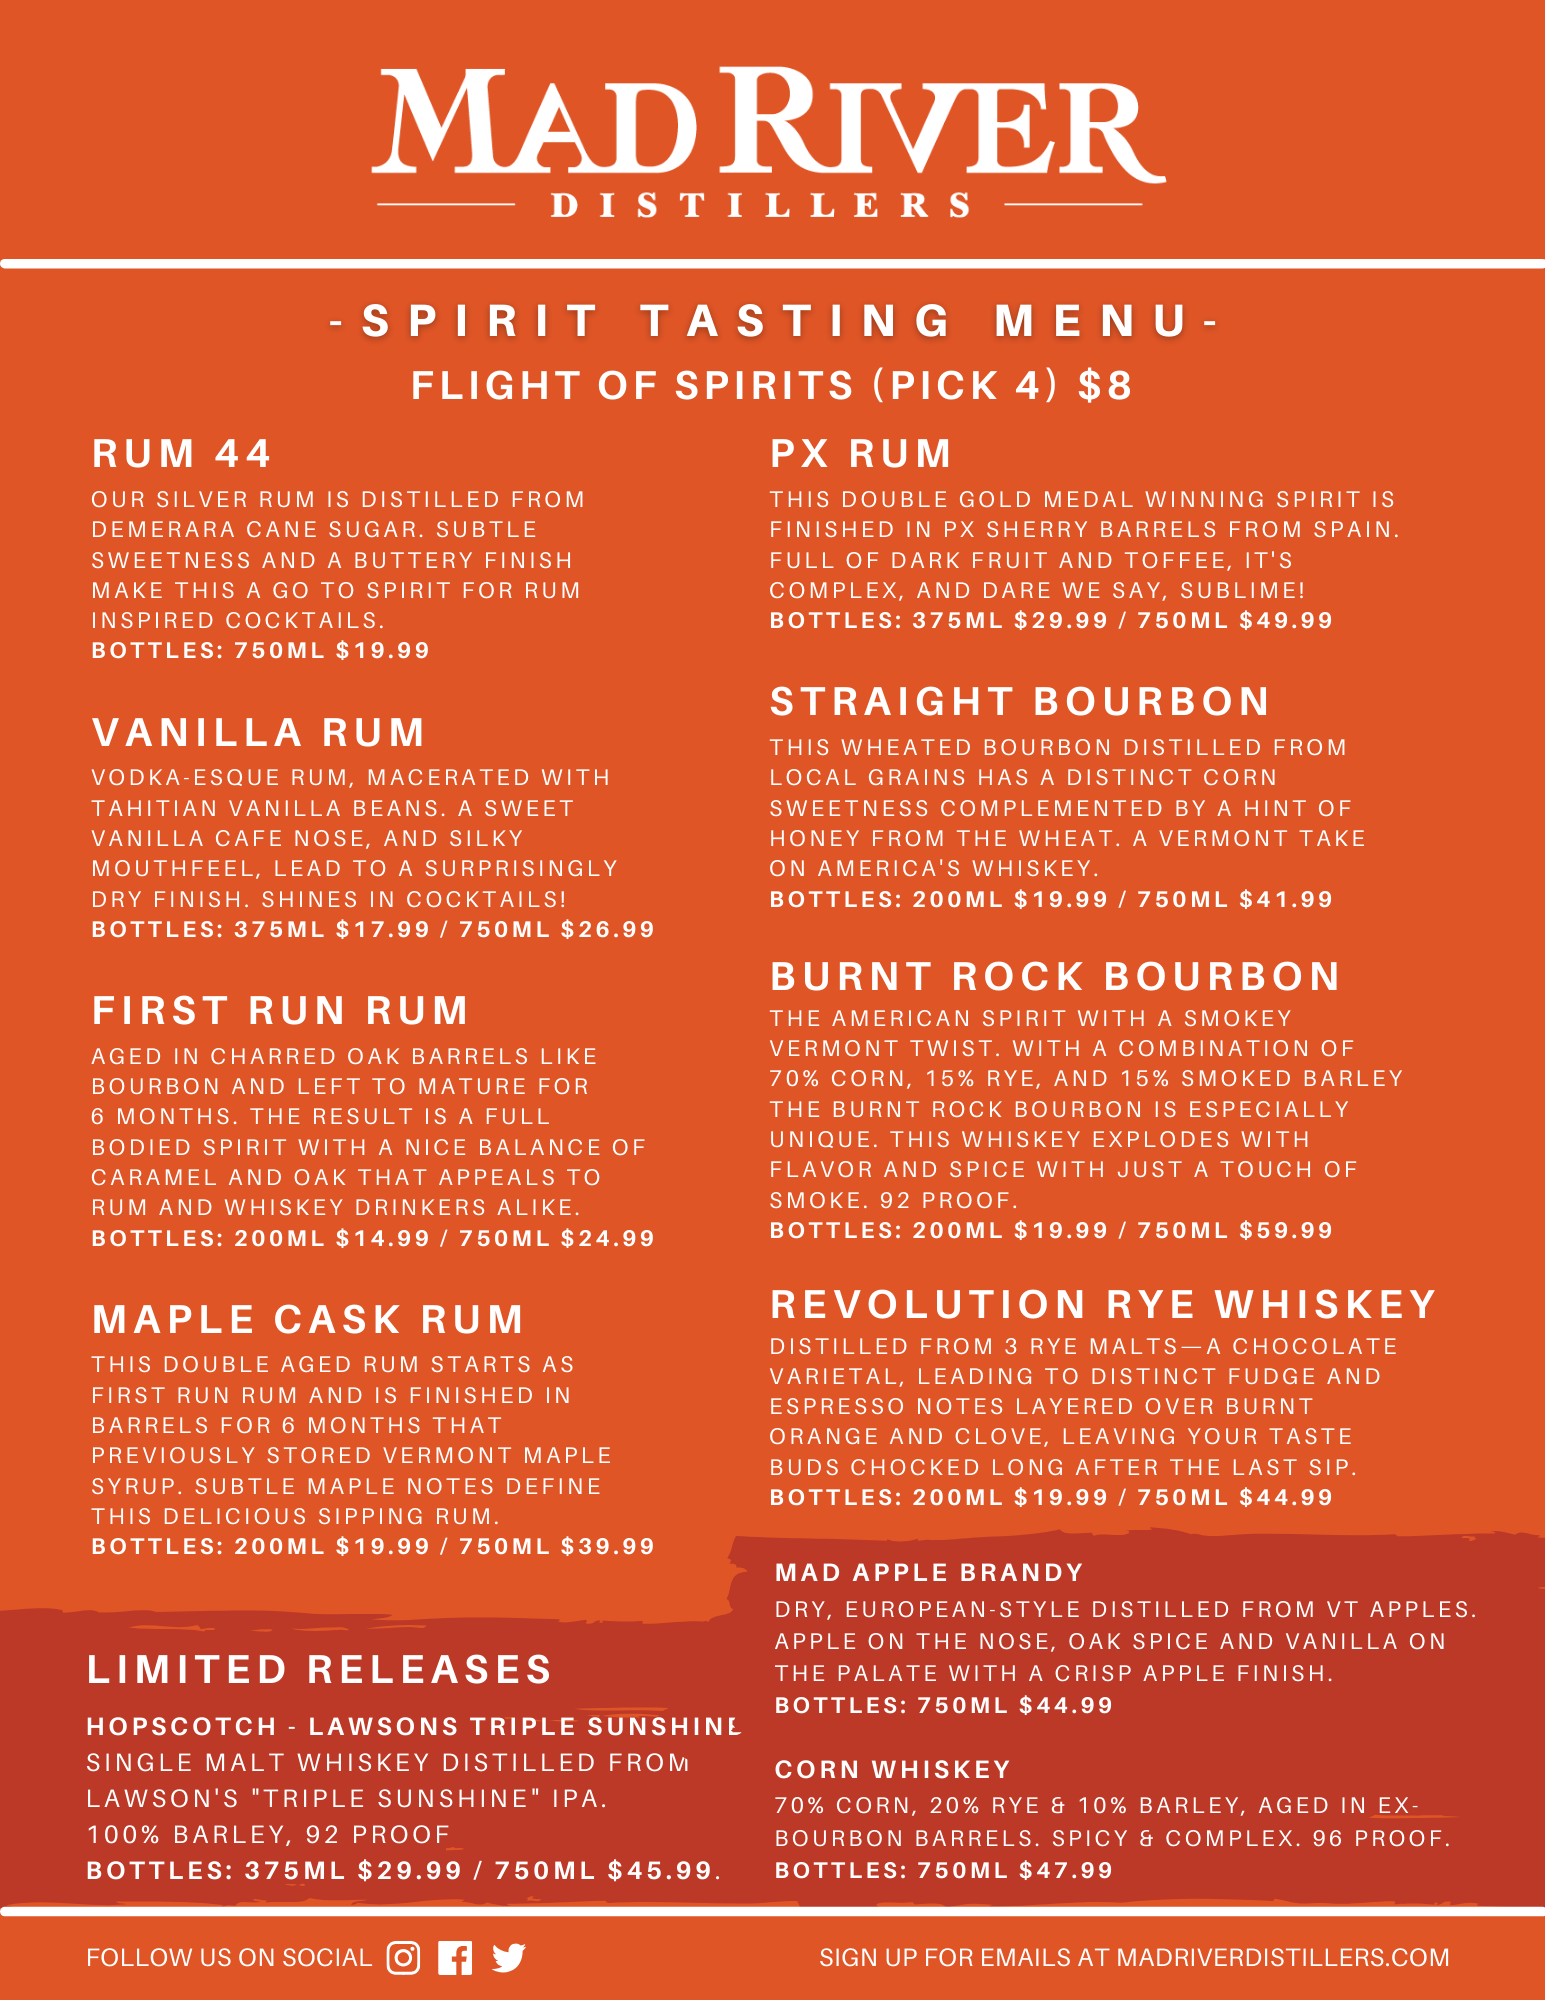 Spirit Tasting Menu: Rum 44, Vanilla Rum, First Run Rum, Maple Cask Rum, PX Rum, Straight Bourbon, Burnt Rock Bourbon, Revolution Rye Whiskey.